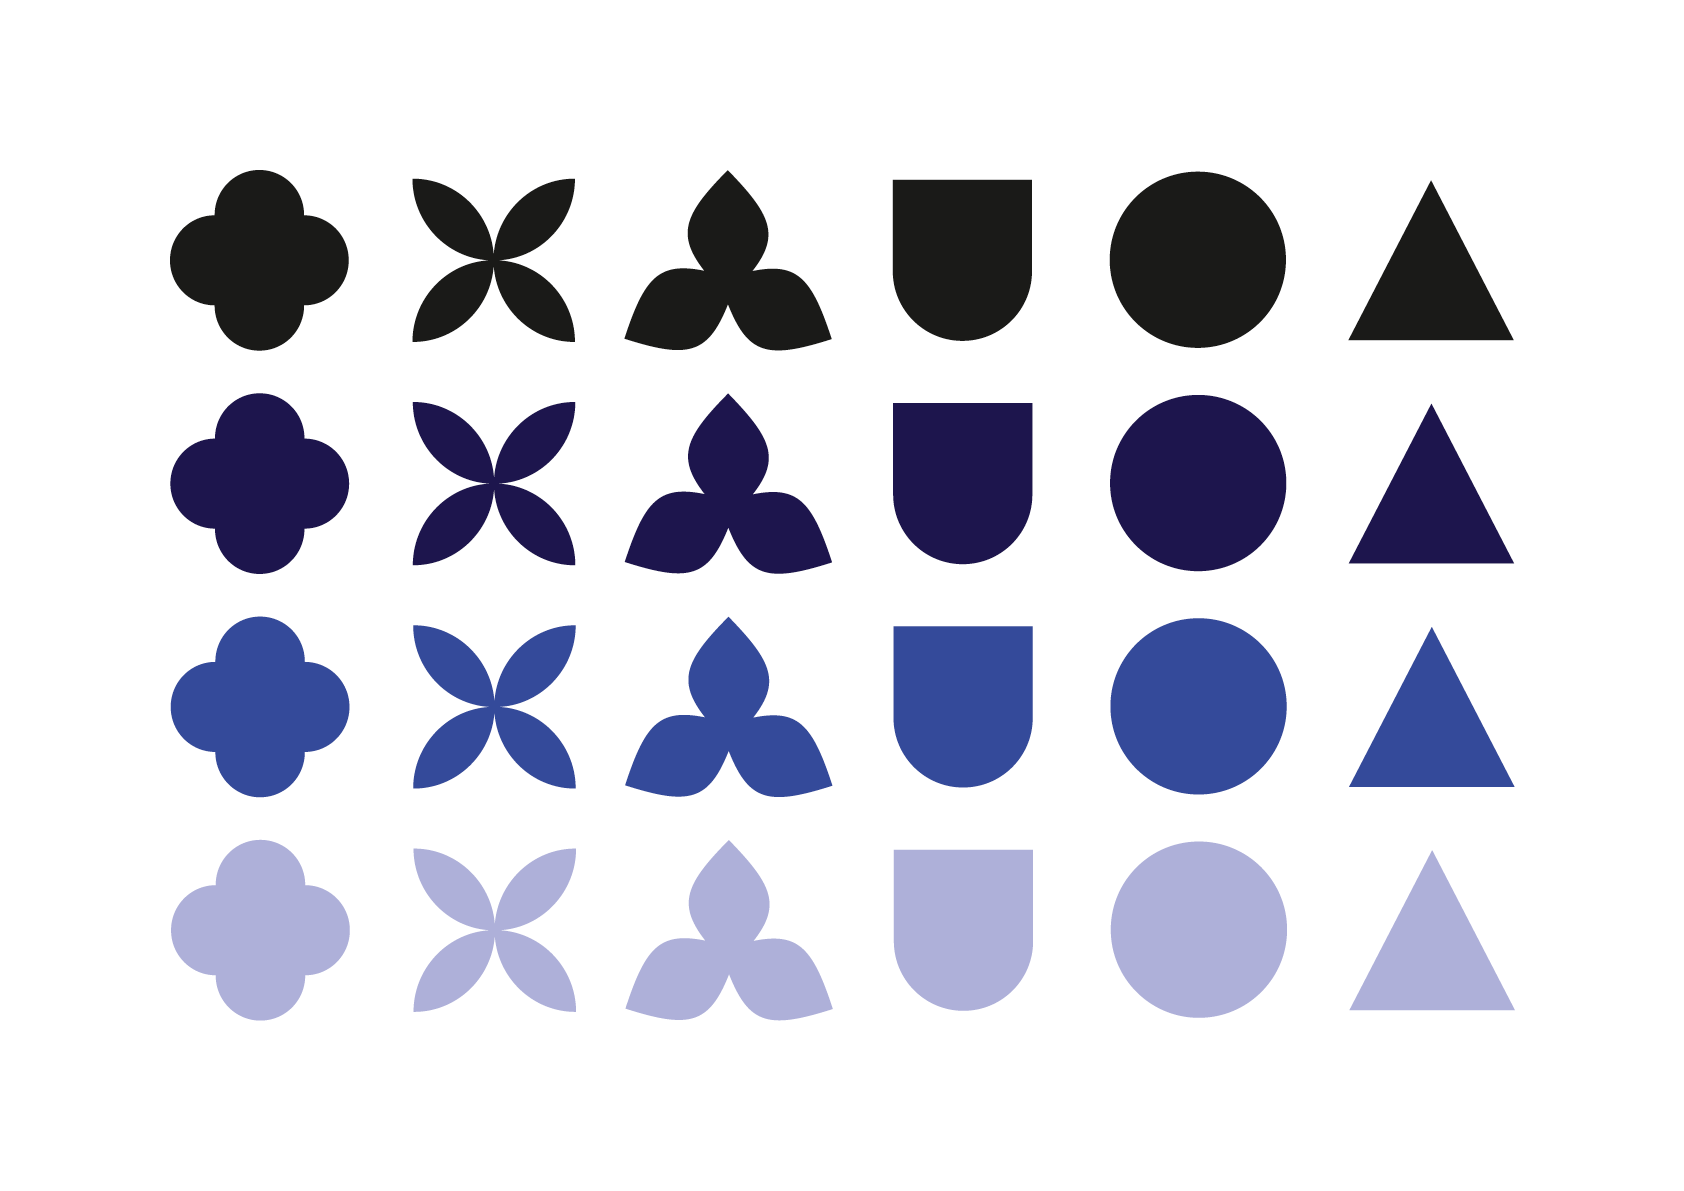 Gestaltungselemente in den verschiedenen Hauptfarben (Flat-Variante)